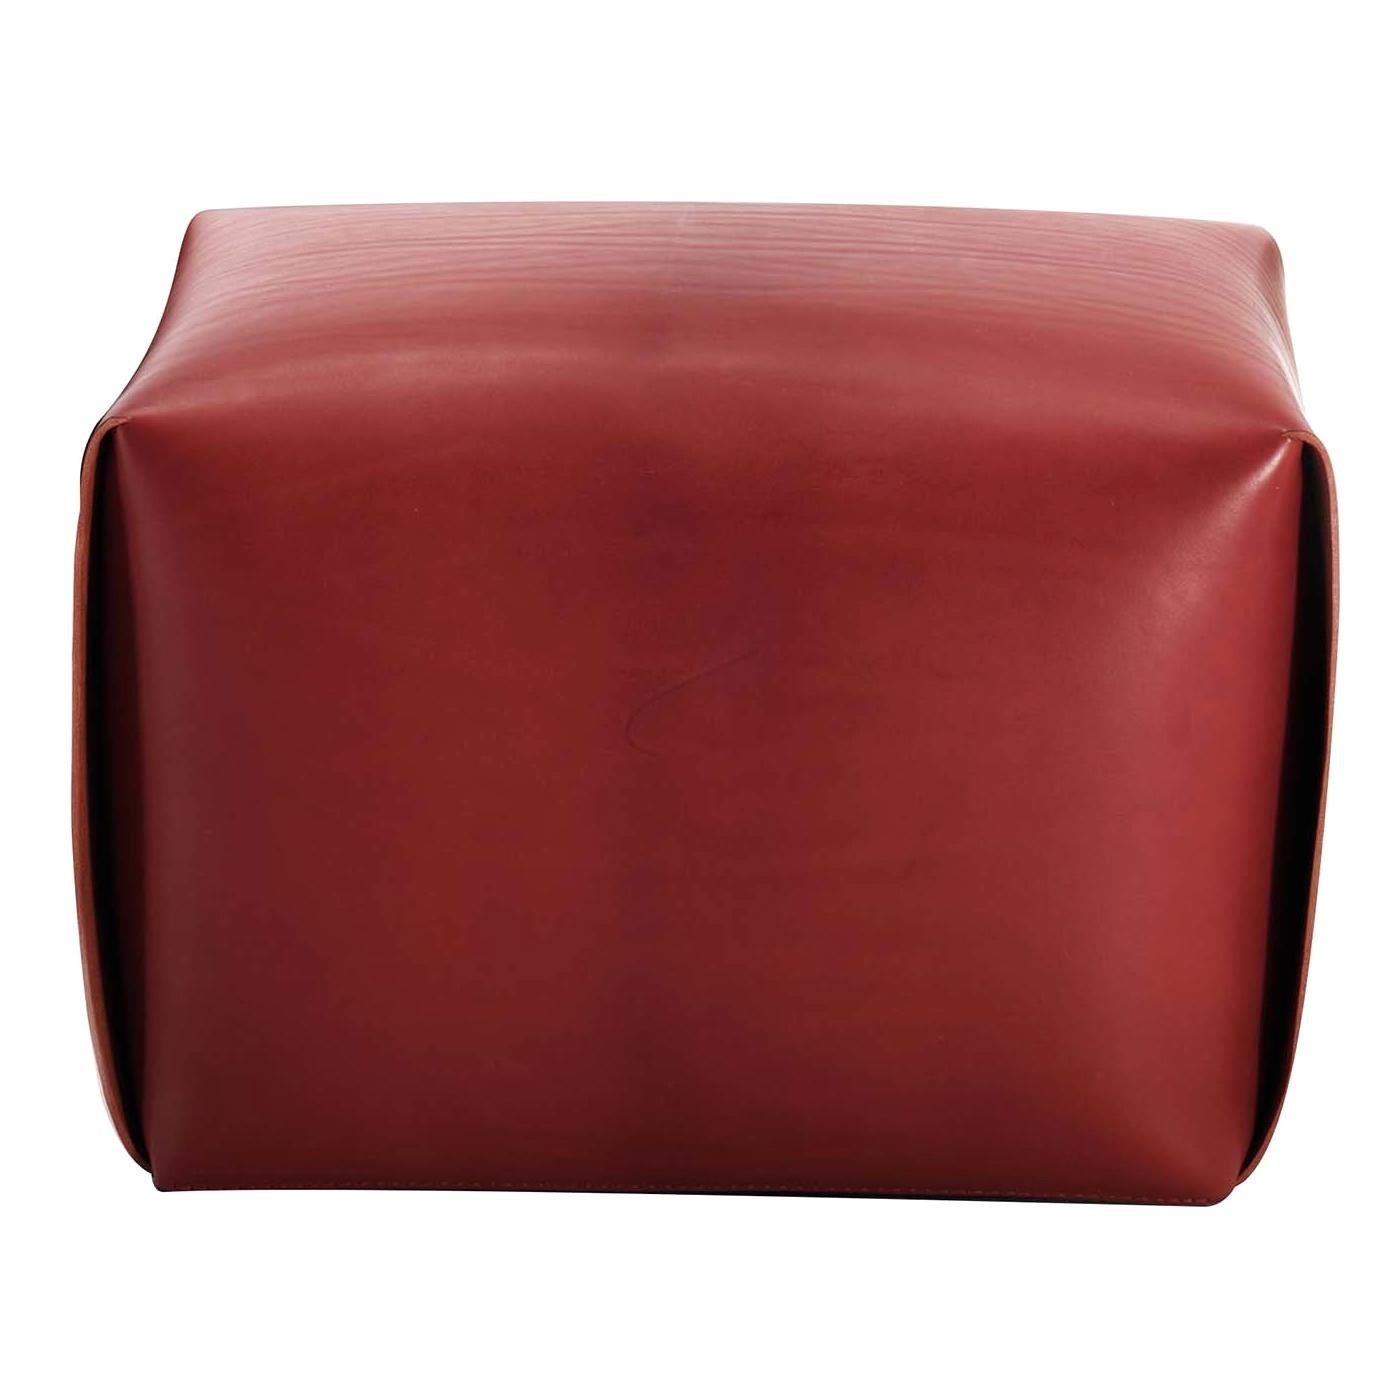 Big Bao Red Leather Ottoman by Viola Tonucci